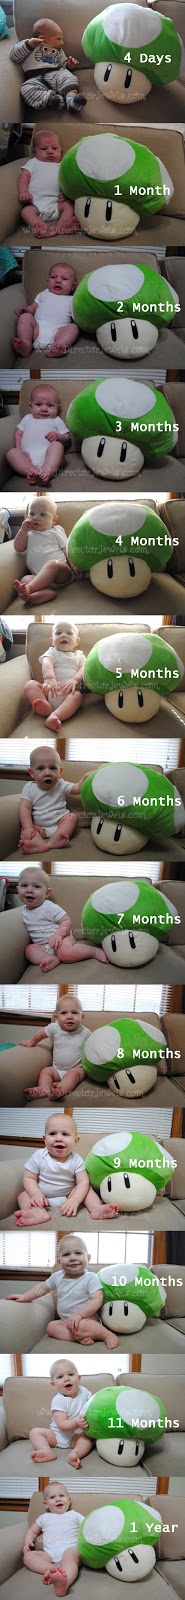 Monthly Baby Growth Photos - 1 Up, Nintendo, Super Mario Bros